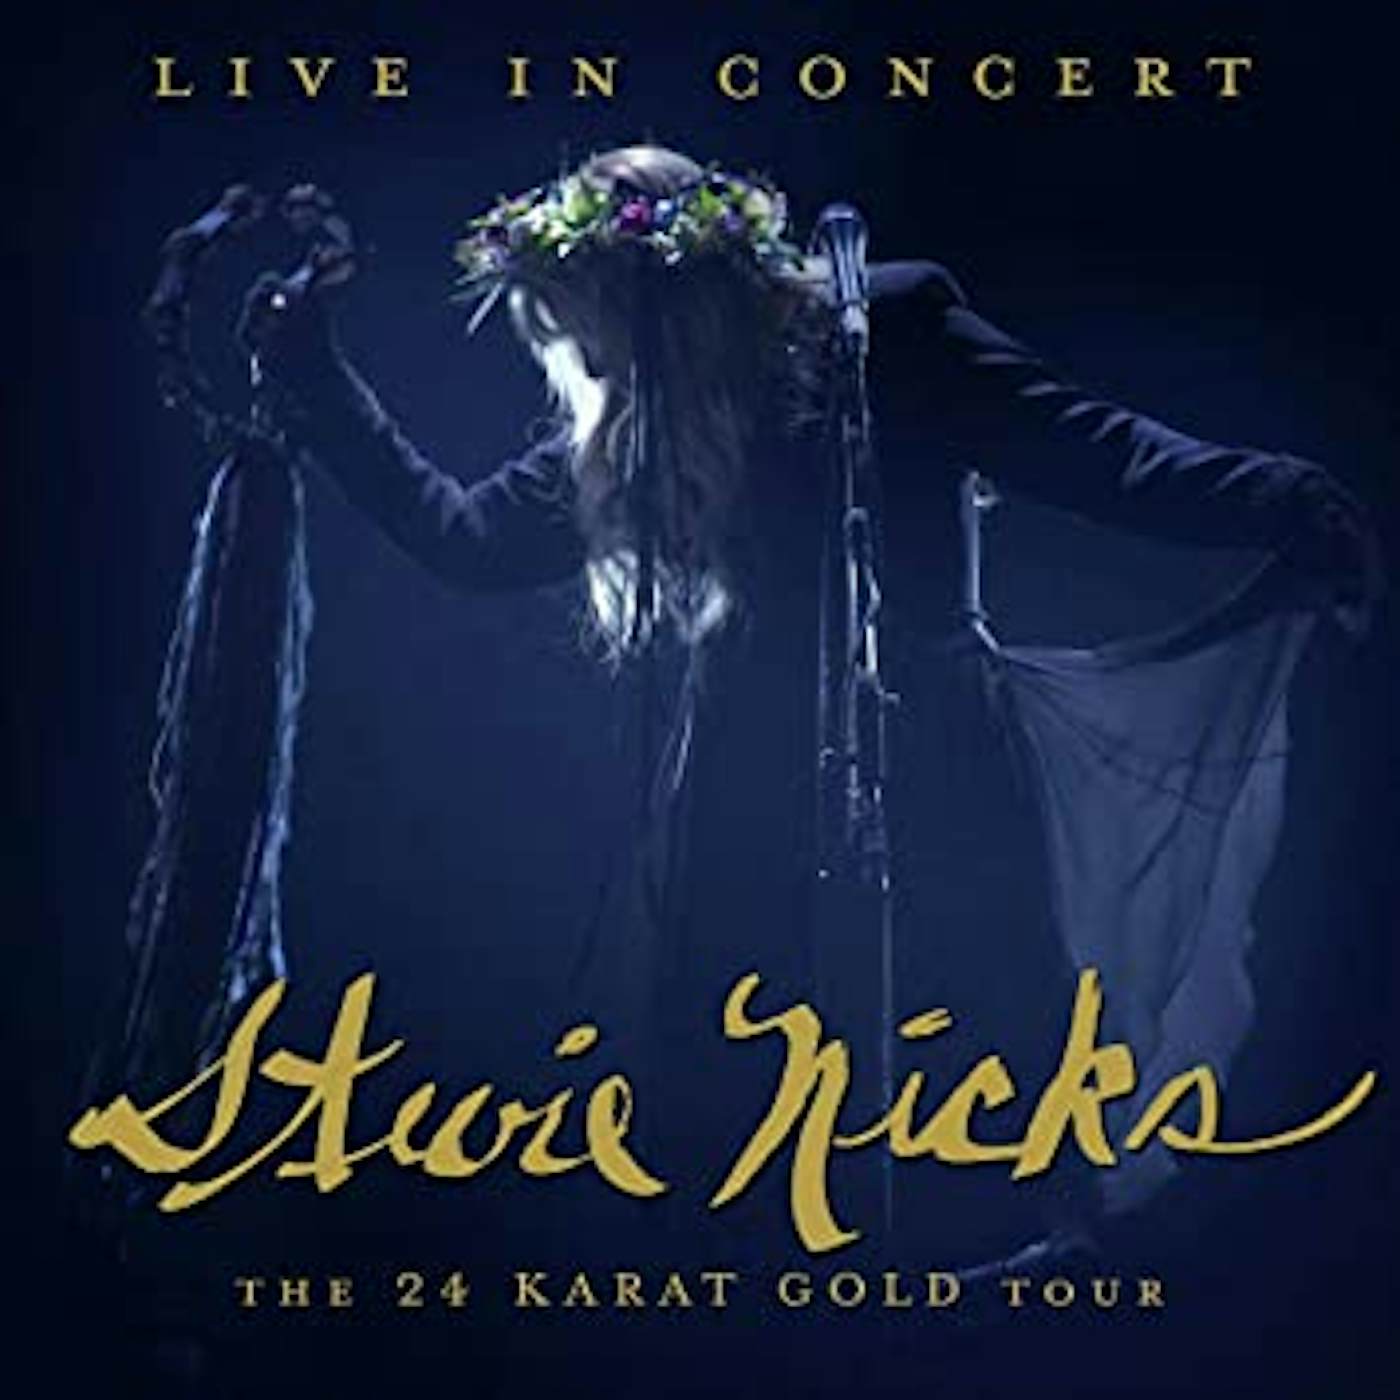 Stevie Nicks LIVE IN CONCERT THE 24 KARAT GOLD TOUR Vinyl Record